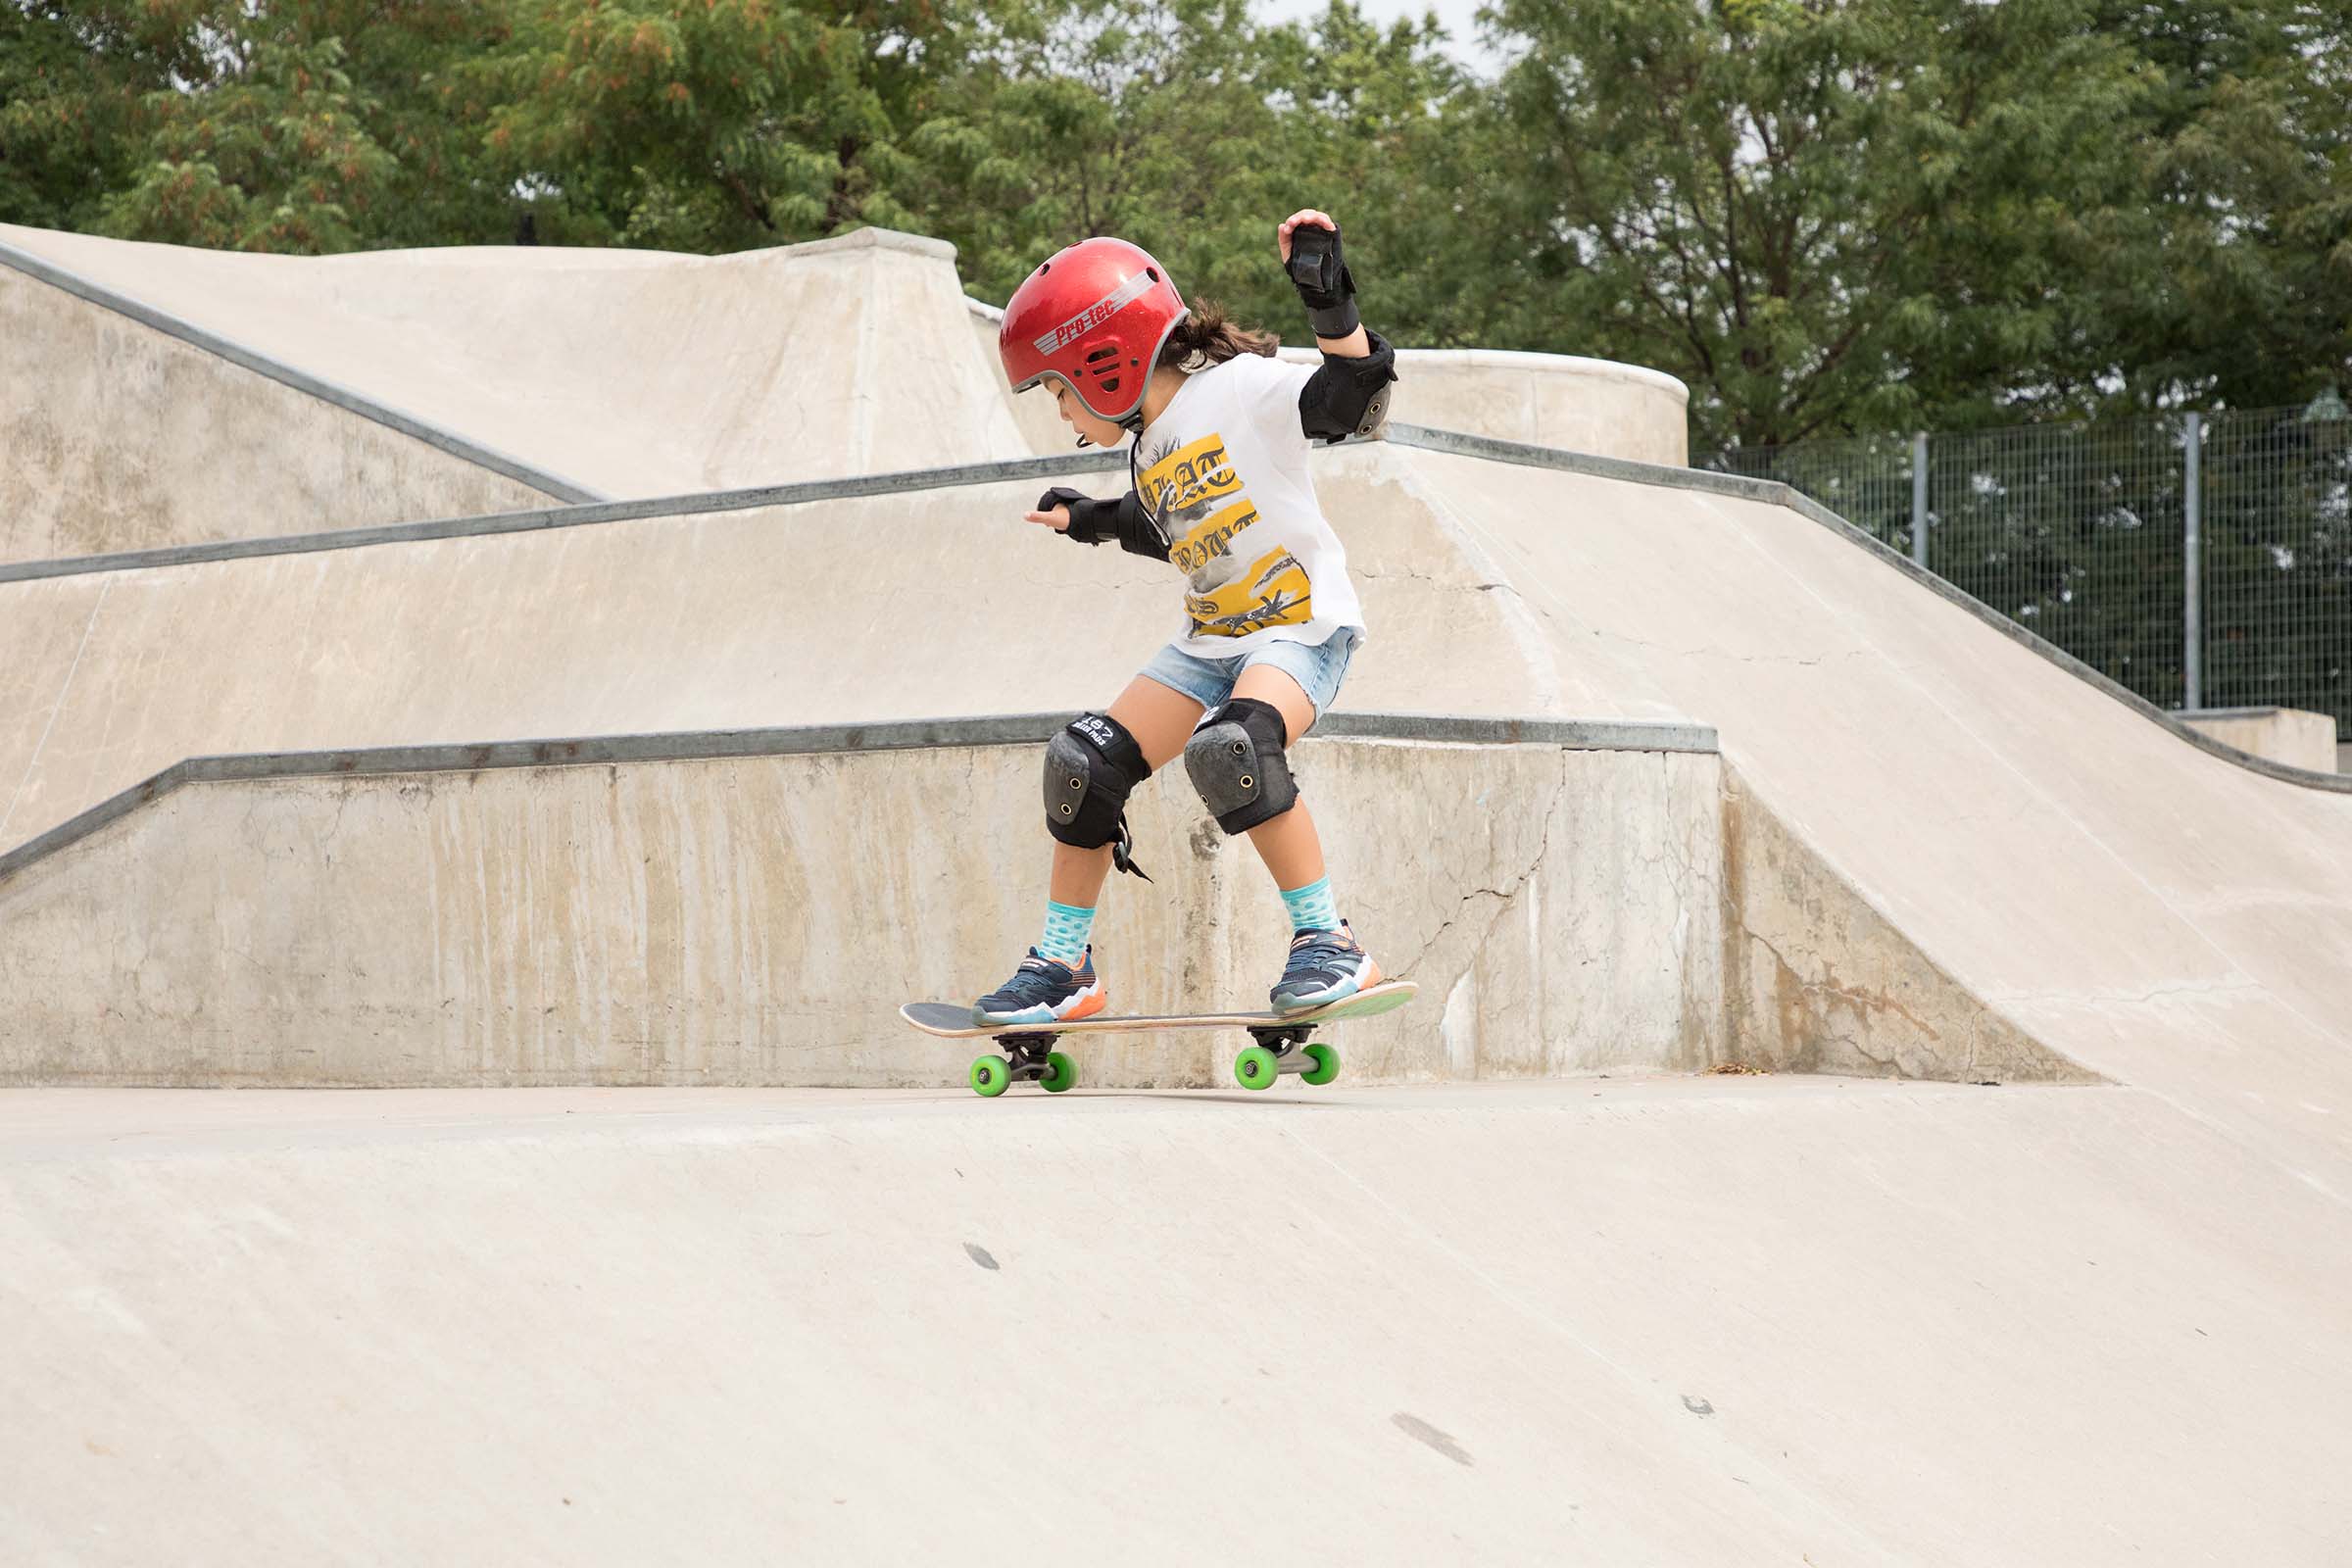 A kid skateboarder in a red helmet coasting around the skatepark